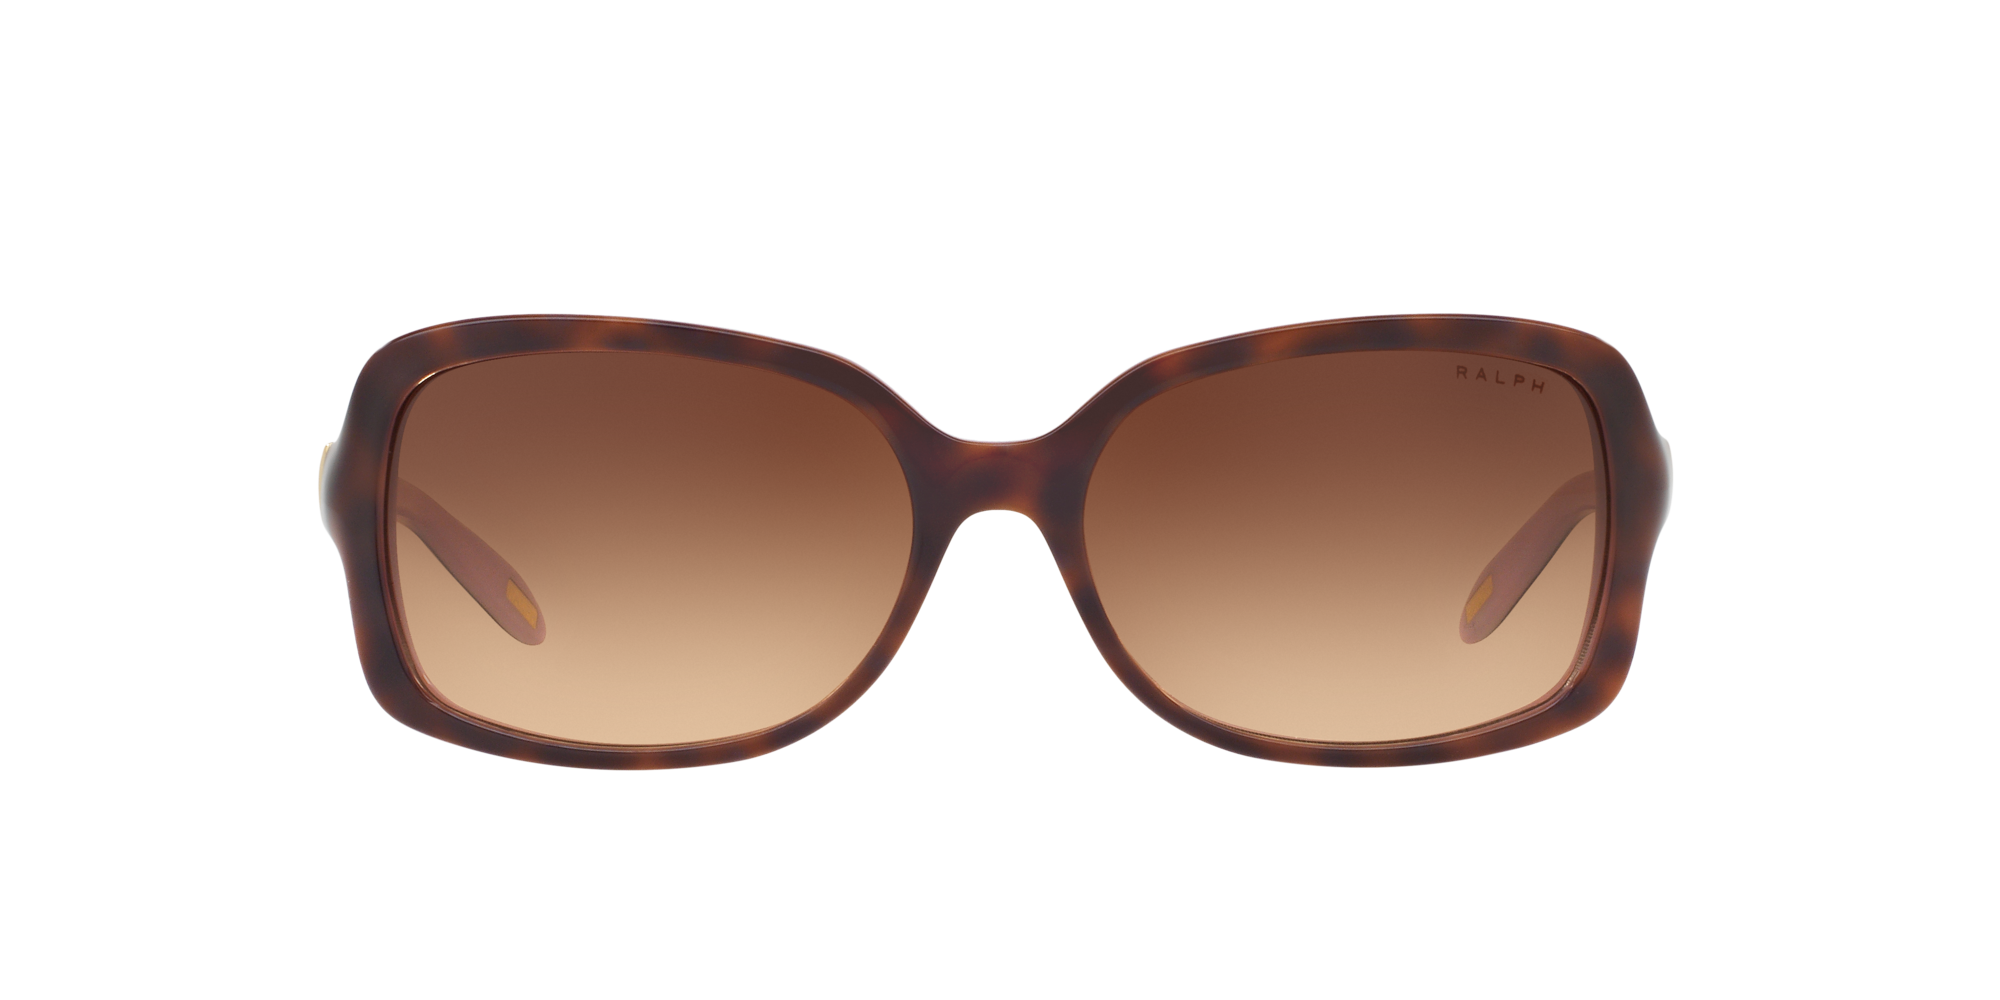 ralph ra5130 sunglasses